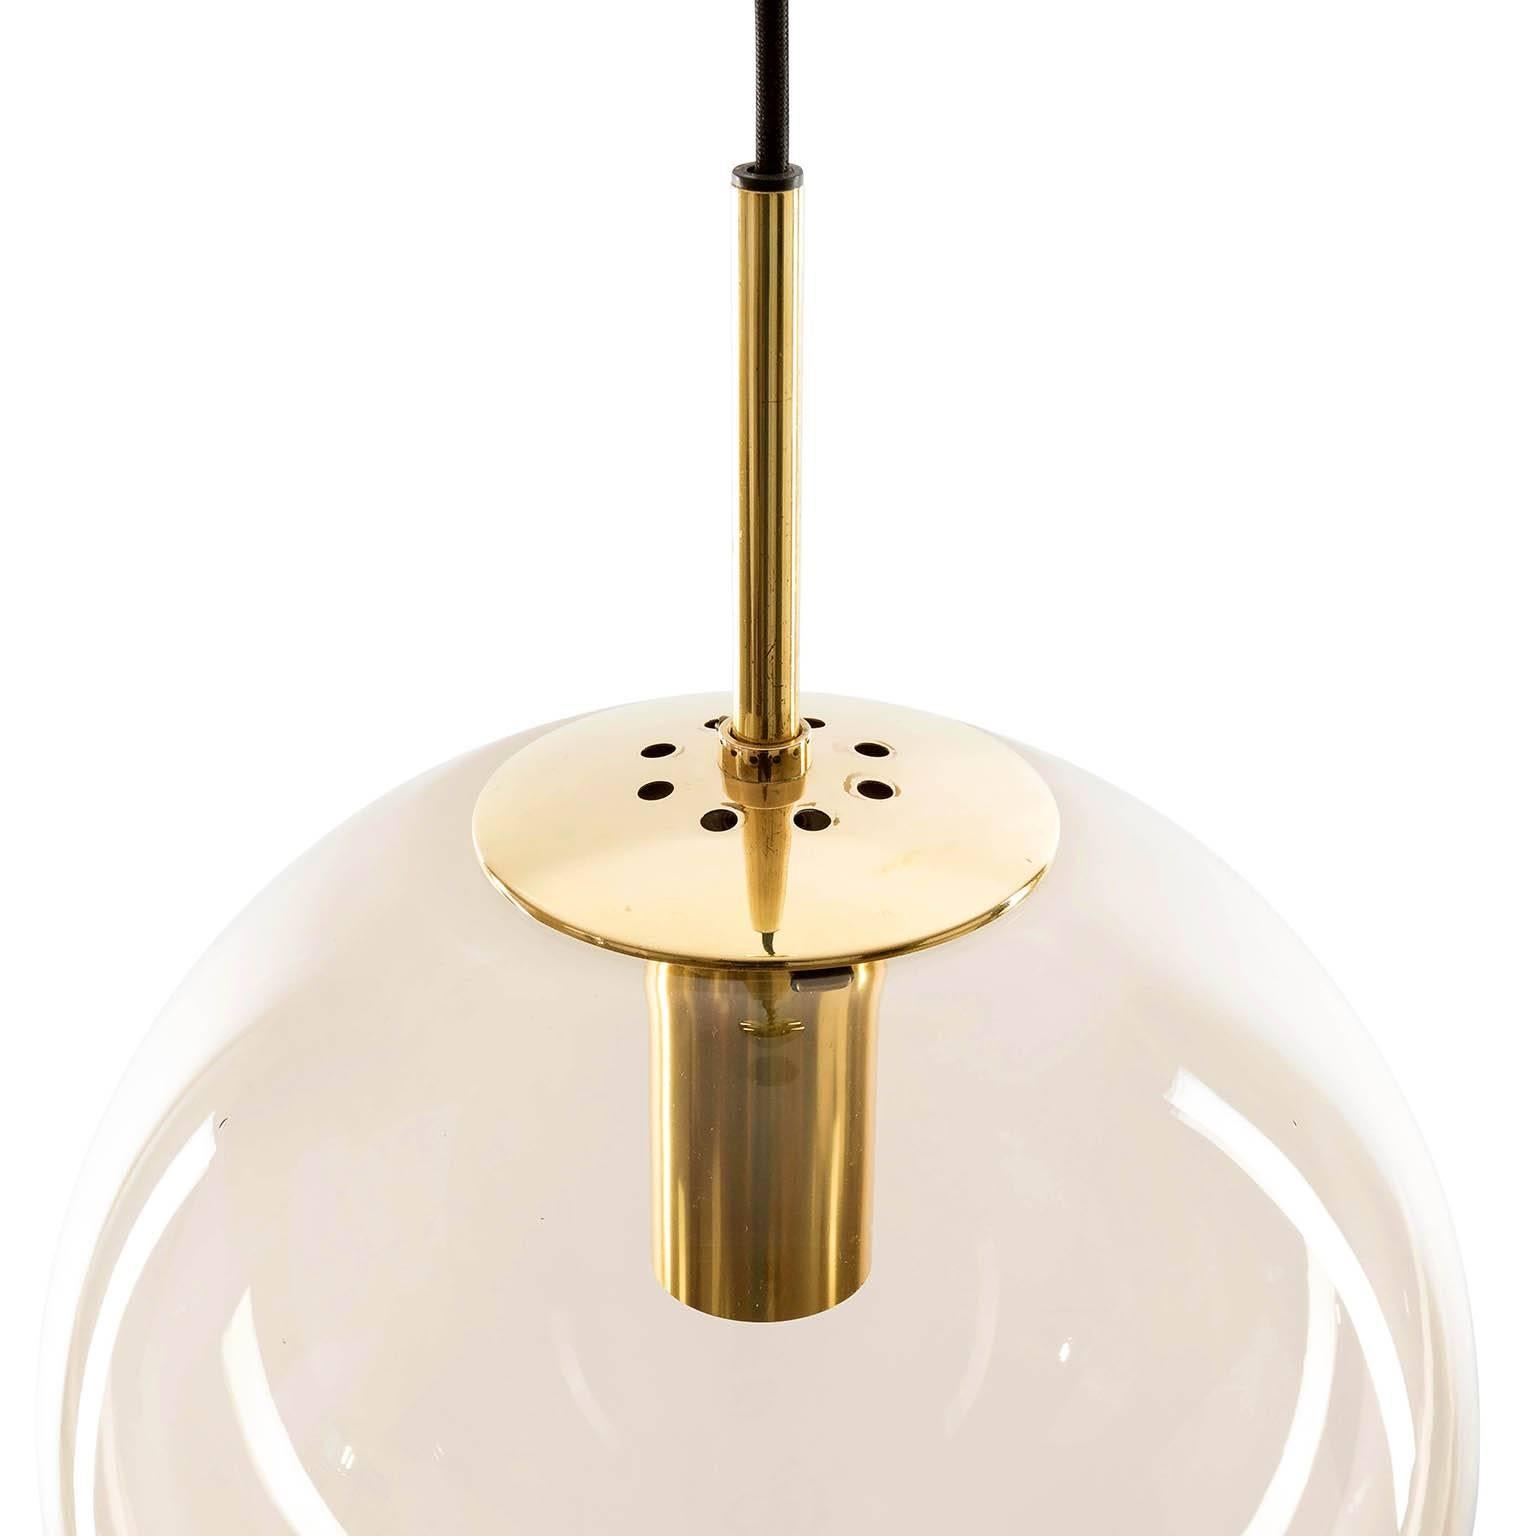 Set of Six Limburg Globe Pendant Lights, Brass and Smoked Glass, 1970s (Ende des 20. Jahrhunderts)